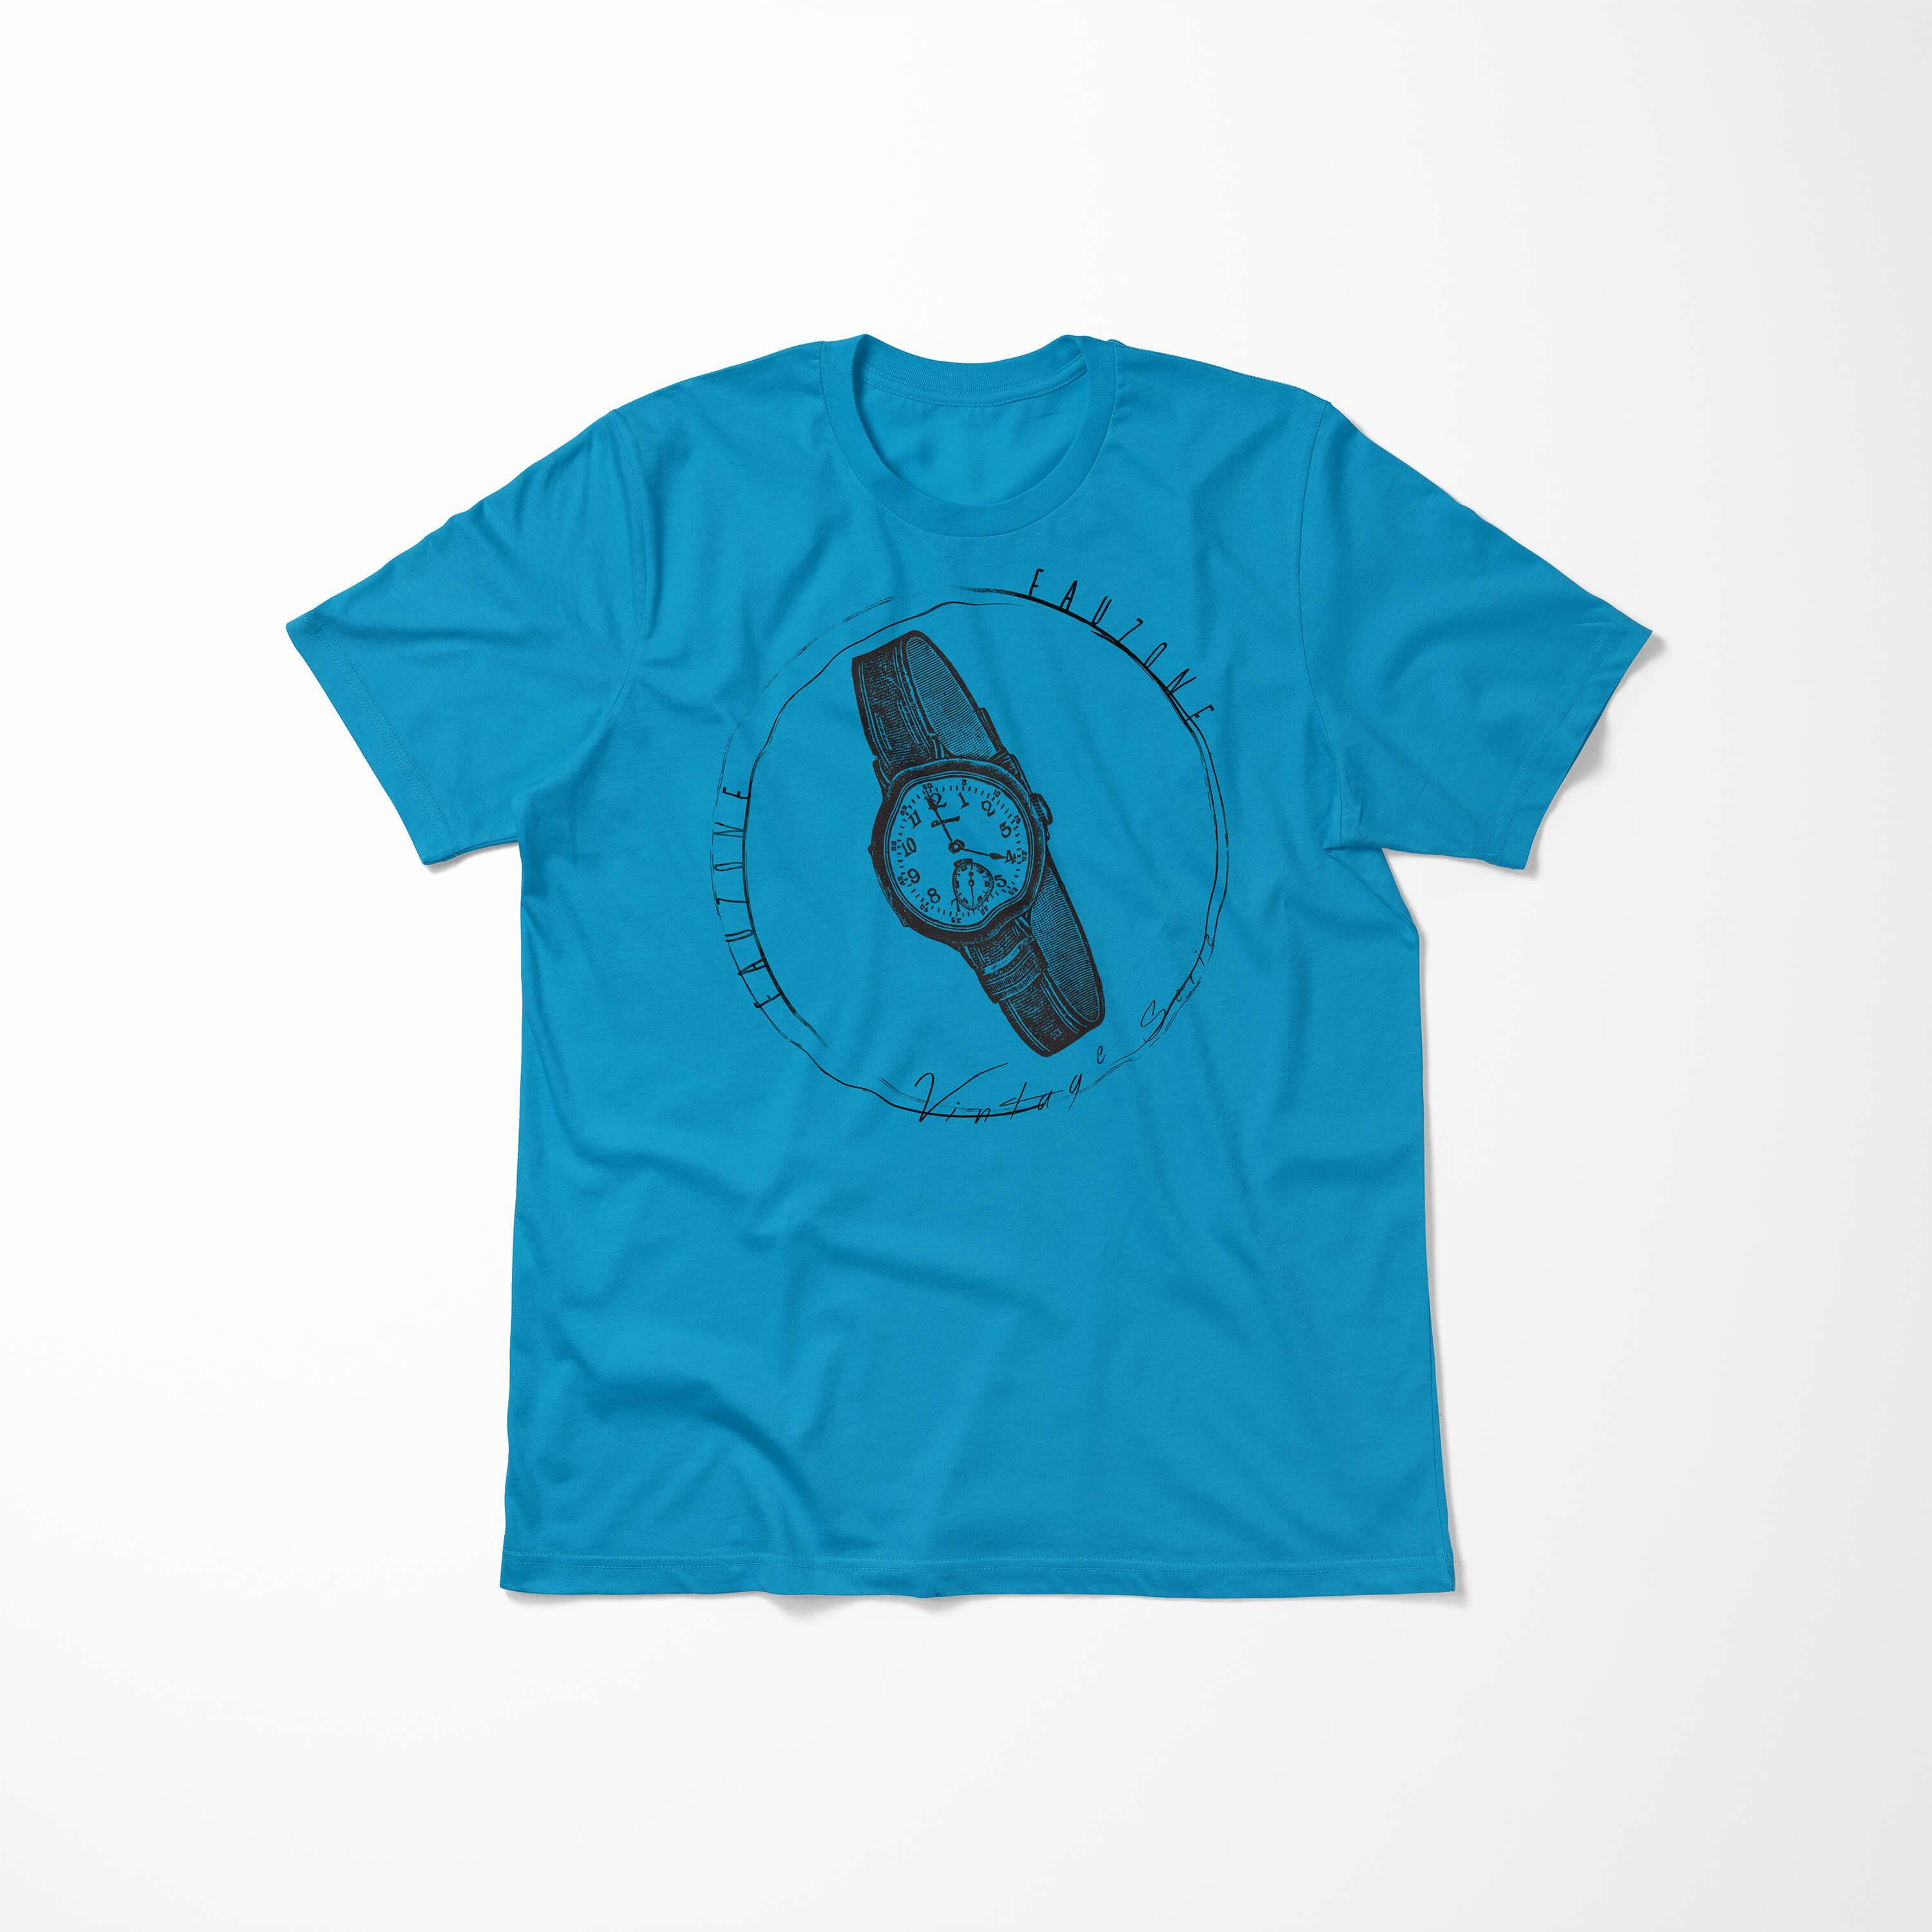 Herren Art T-Shirt Vintage Atoll Sinus Armbanduhr T-Shirt